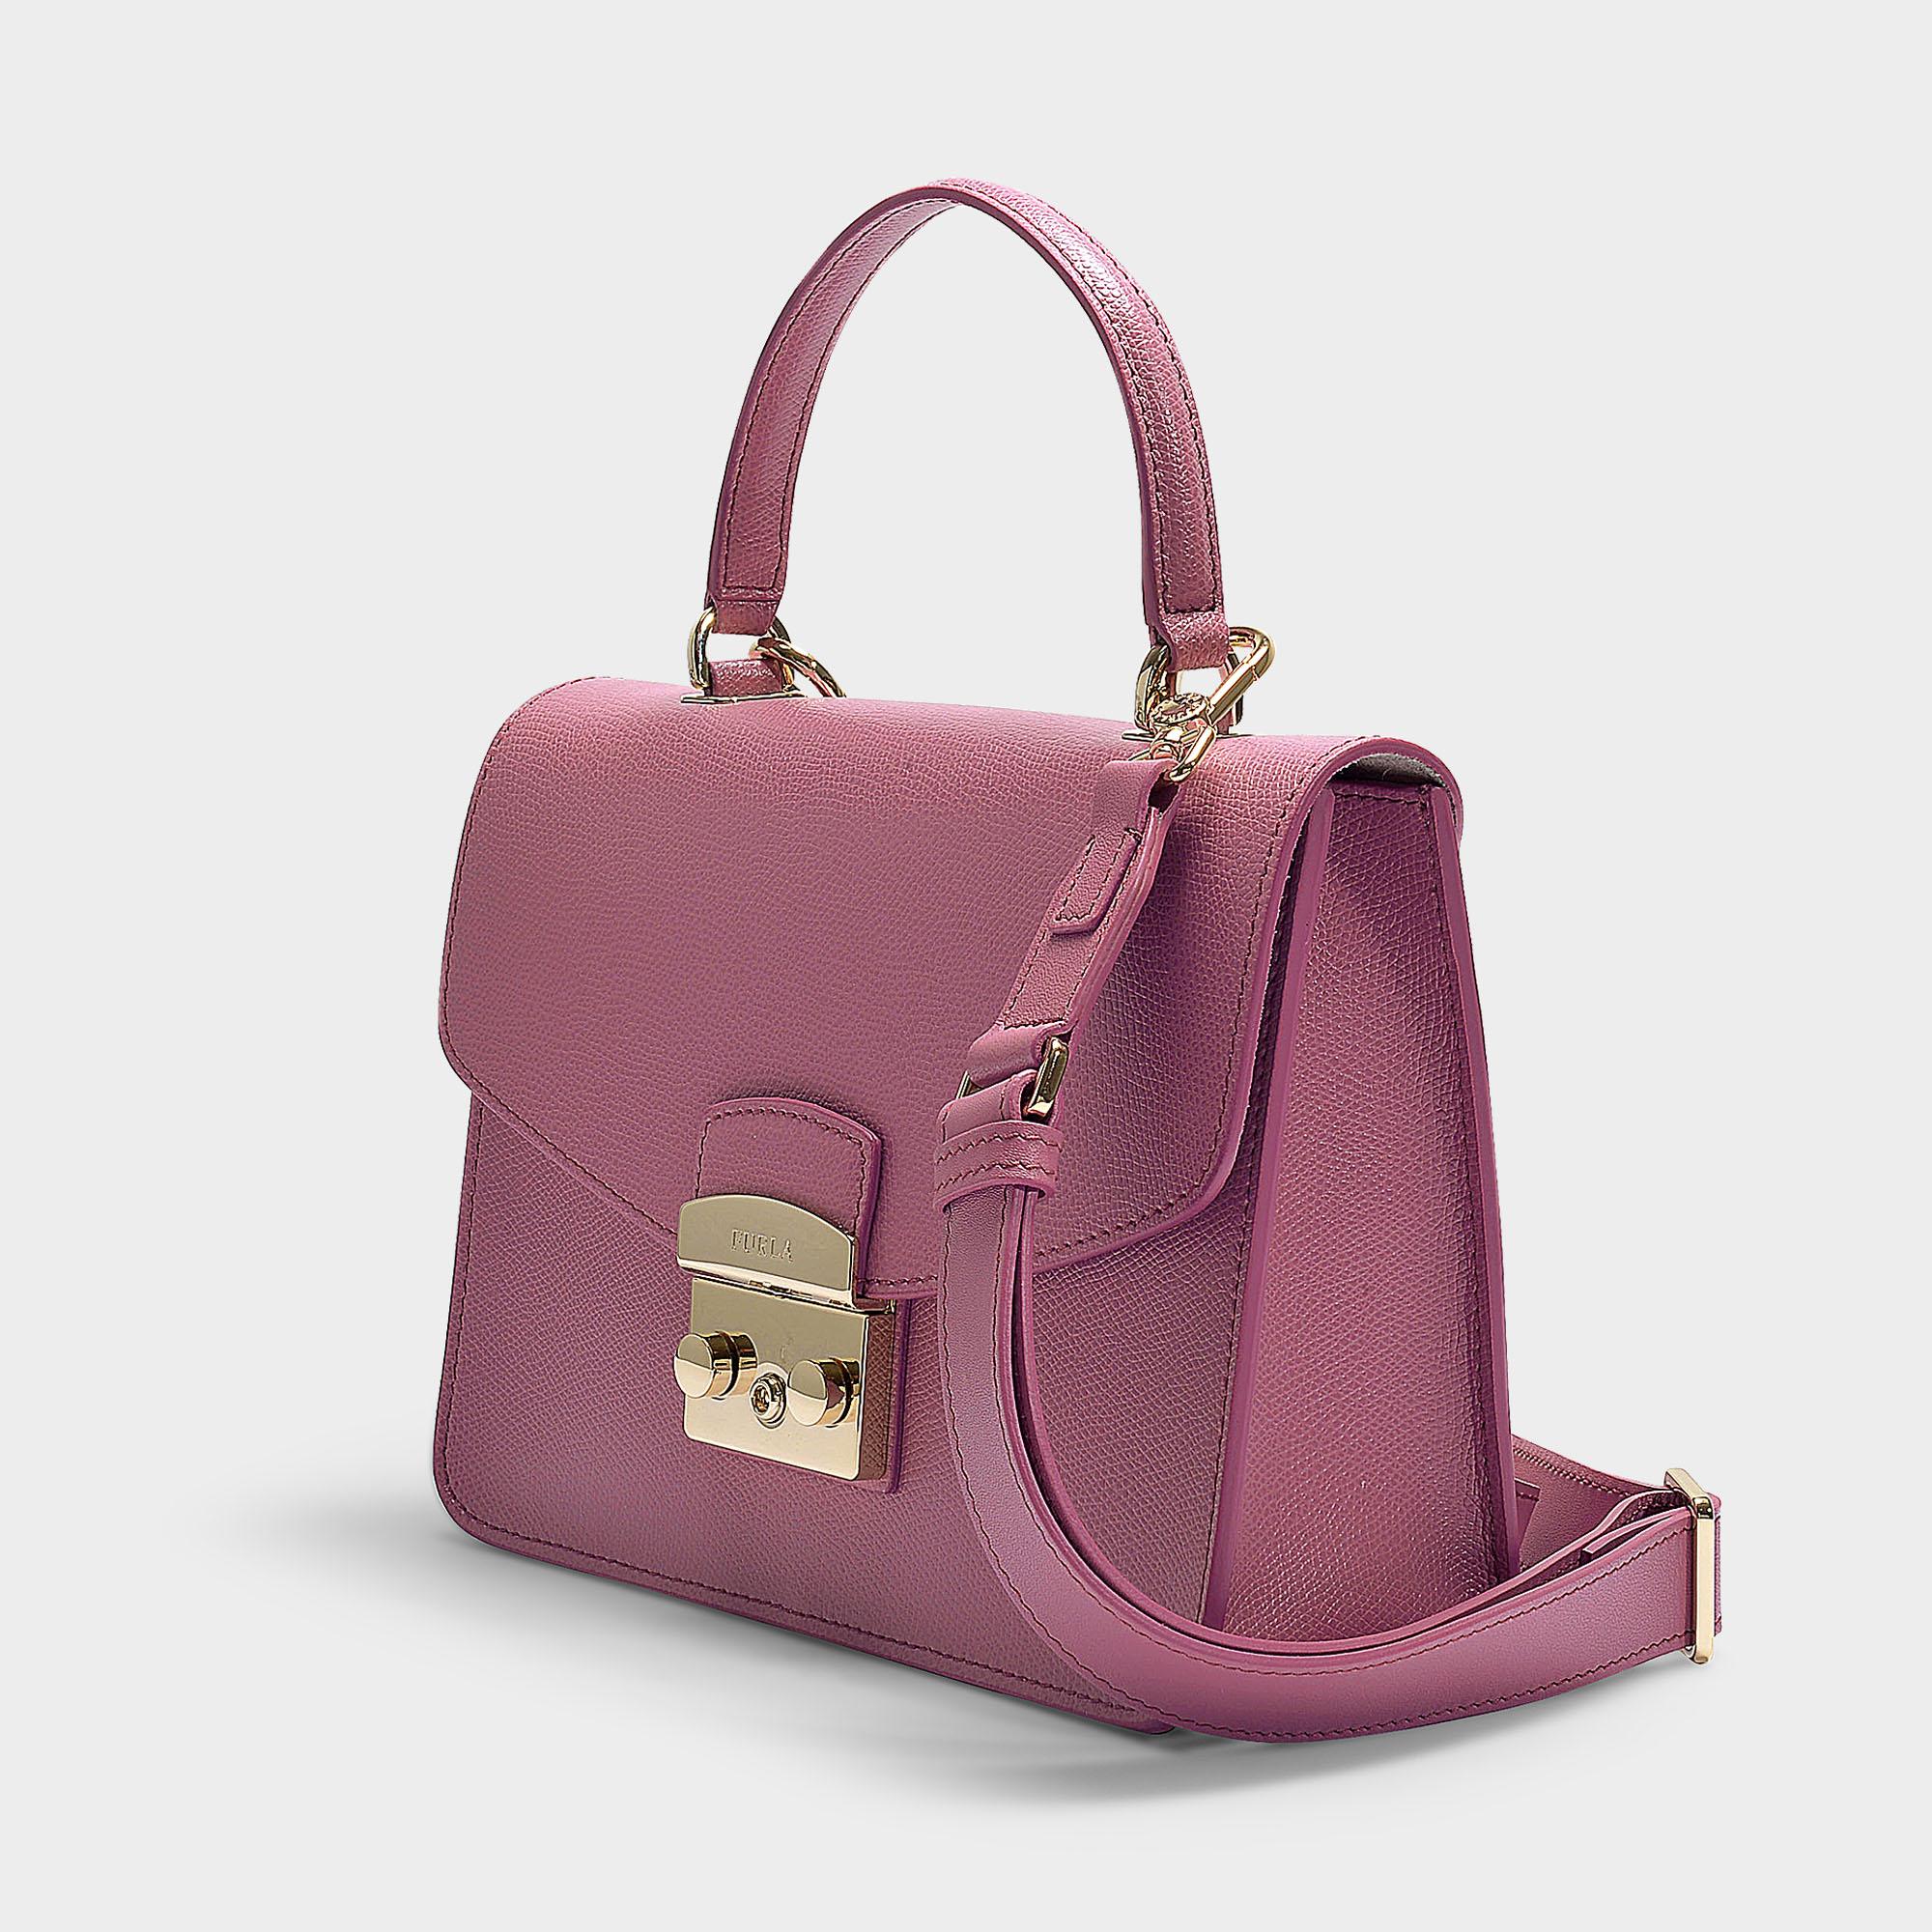 Furla Leather Metropolis S Top Handle Bag In Azalea in Pink - Lyst